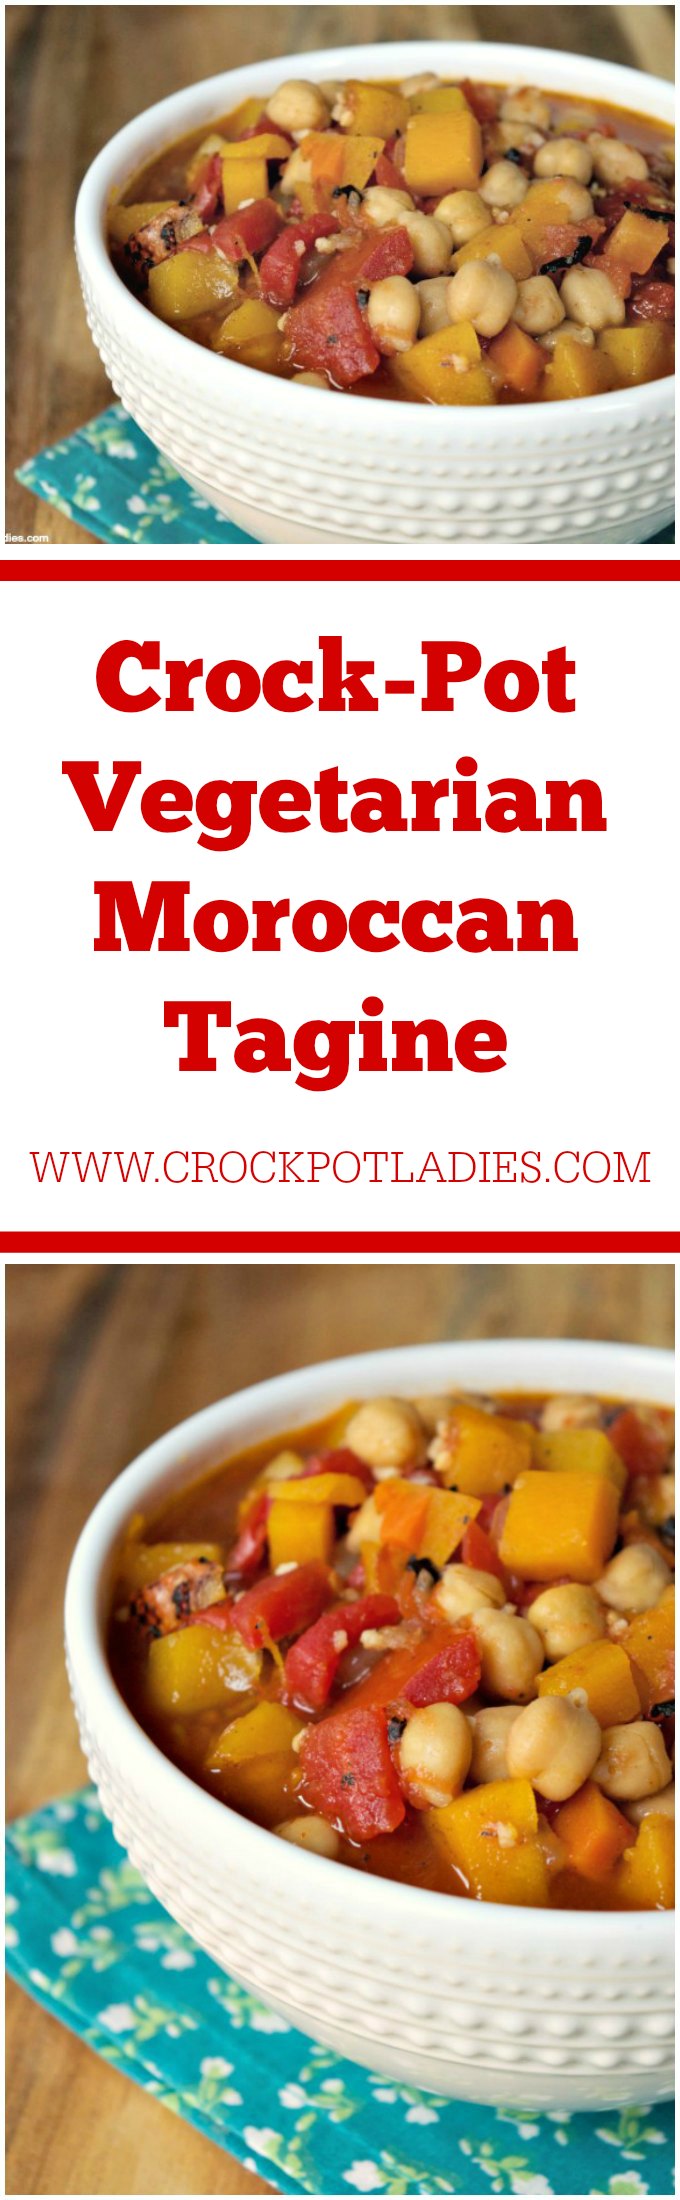 Crock-Pot Vegetarian Moroccan Tagine